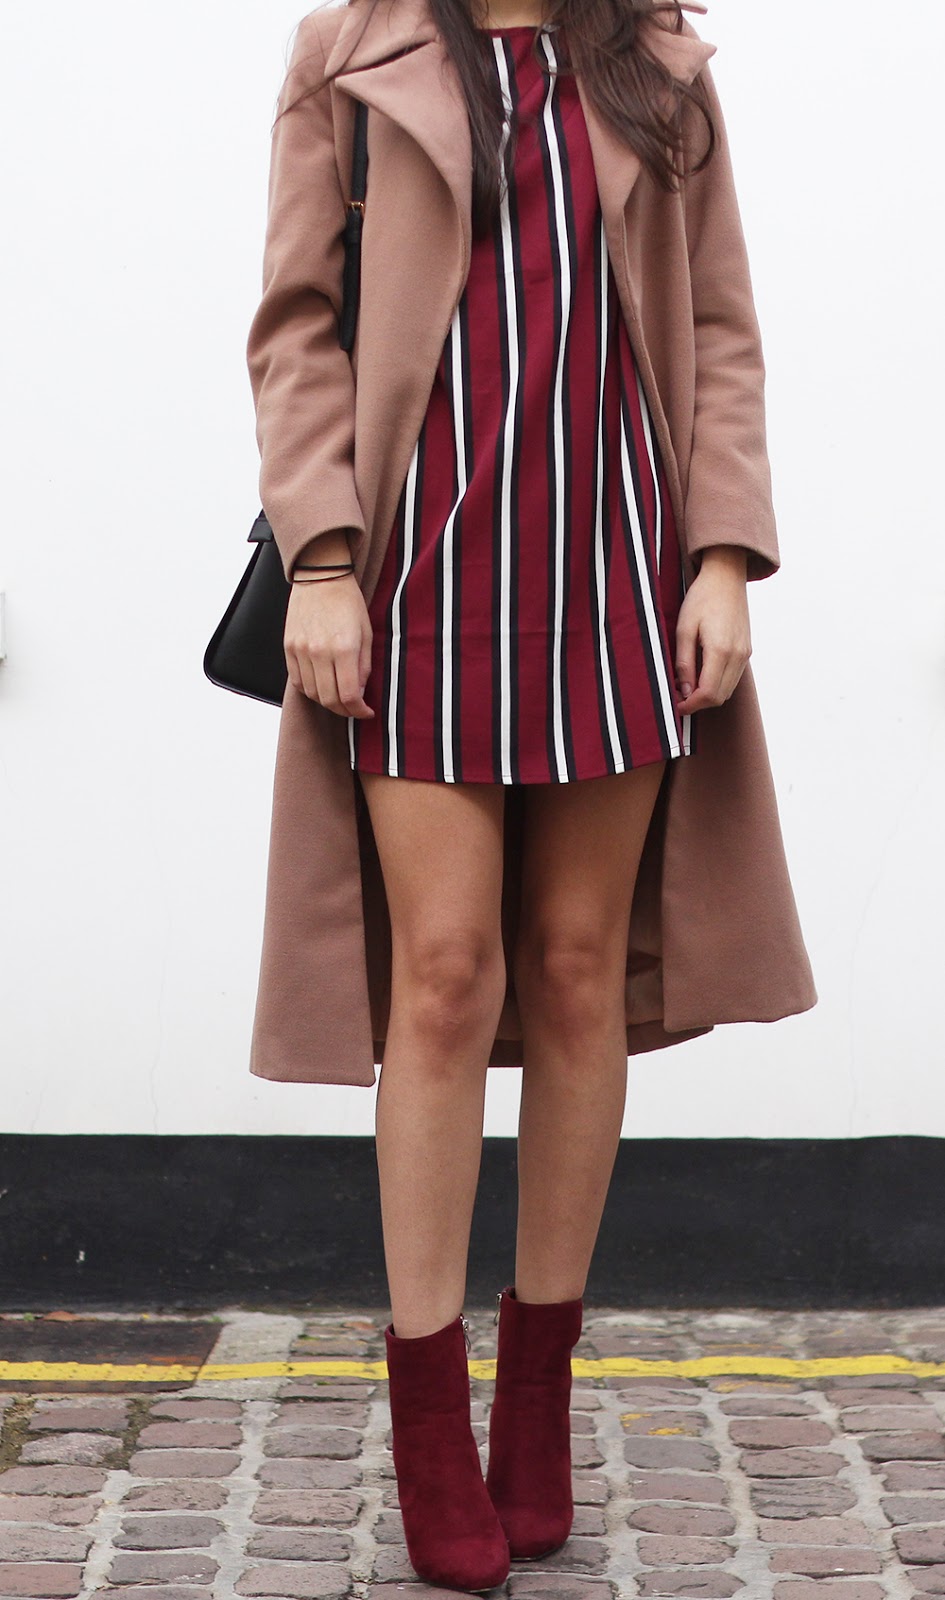 peexo fashion blogger wearing burgundy and camel coat